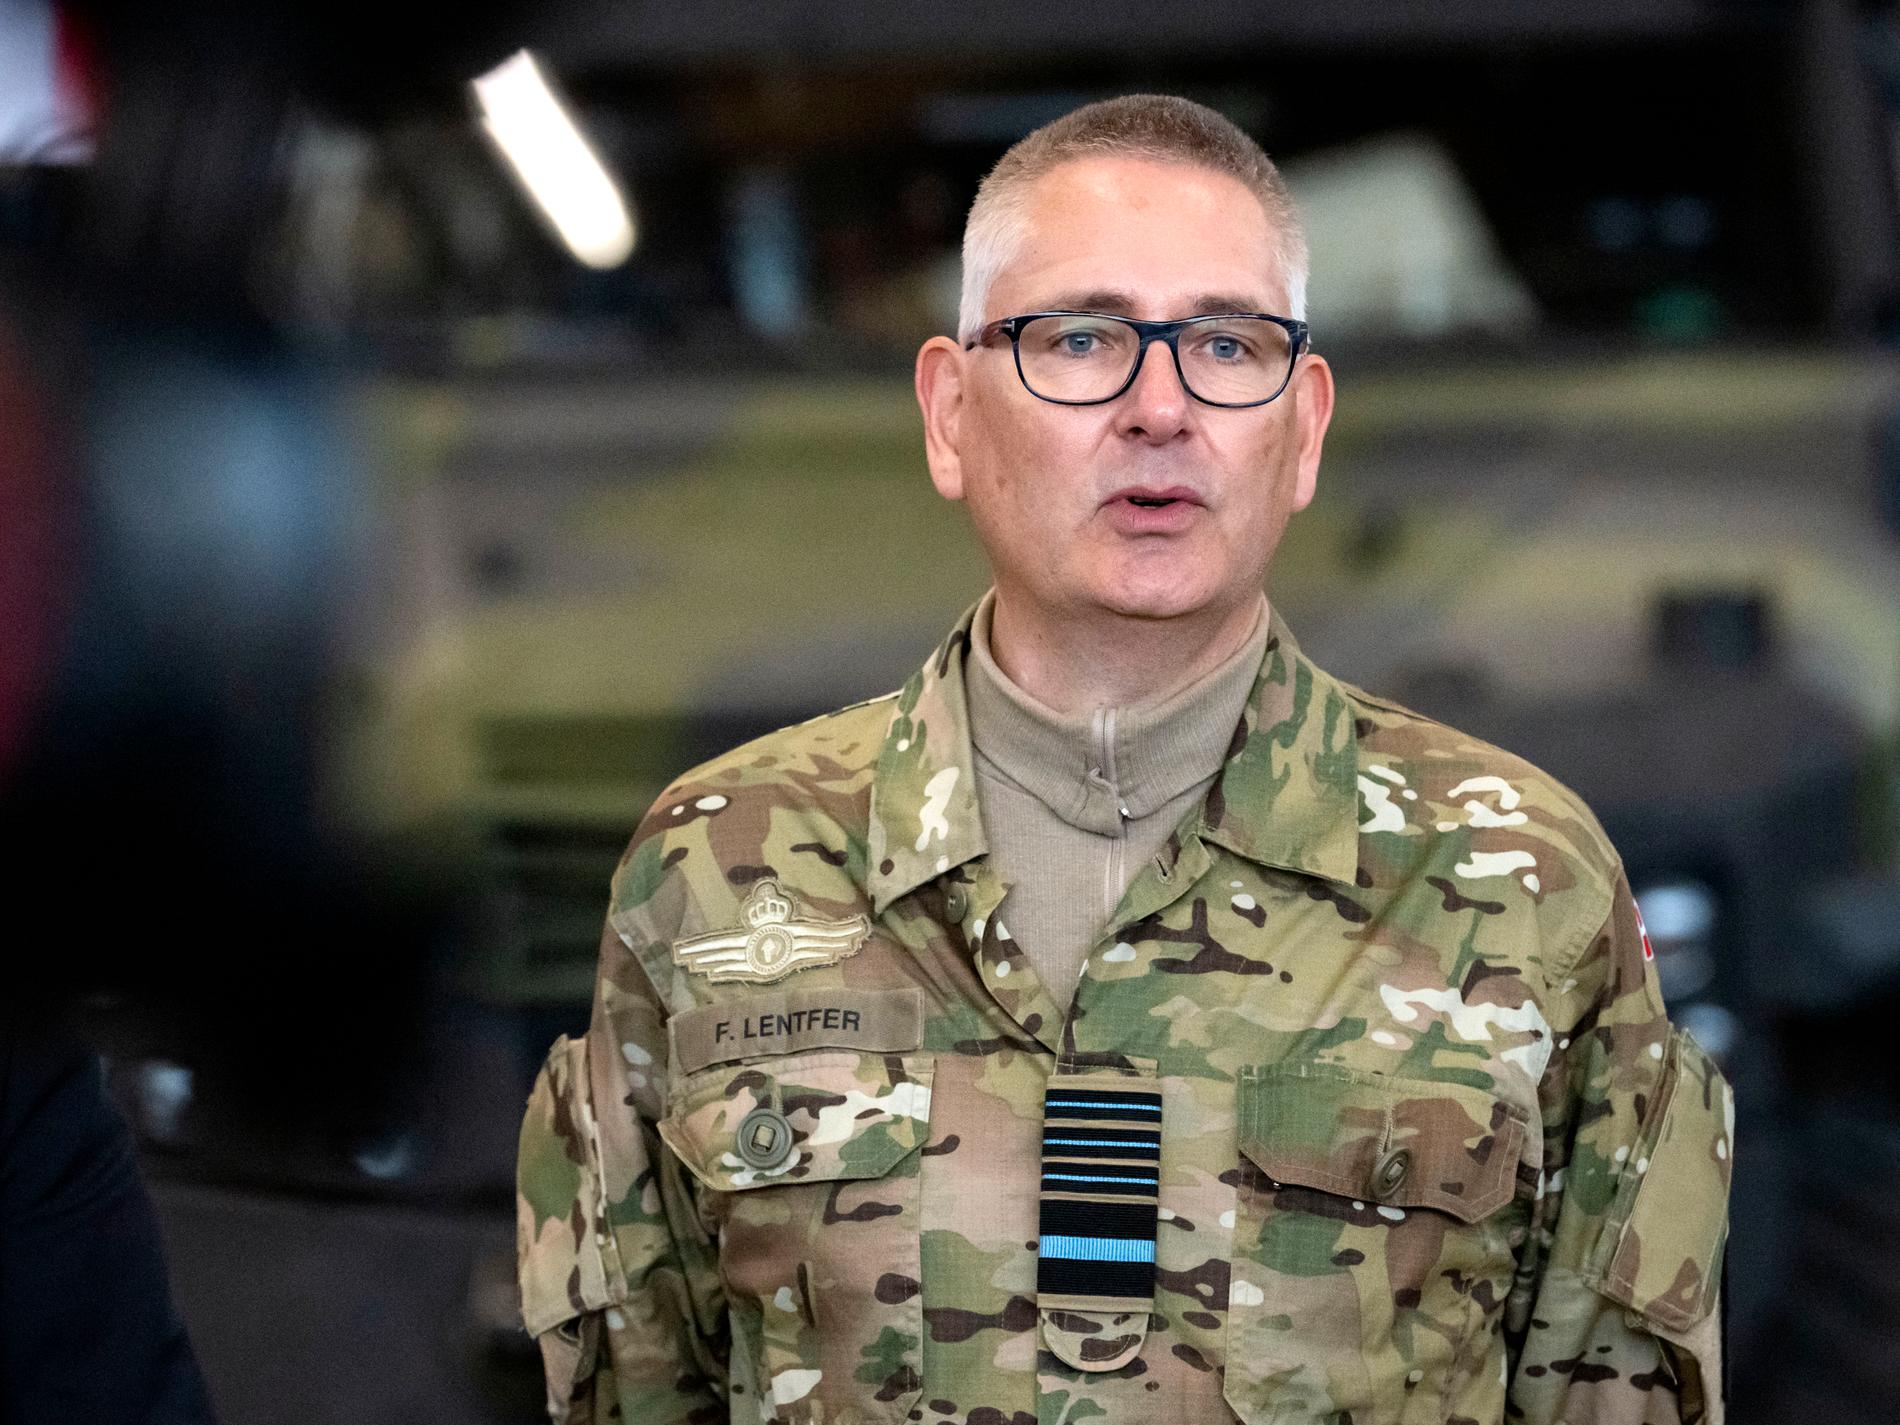 Danmarks försvarschef får sparken